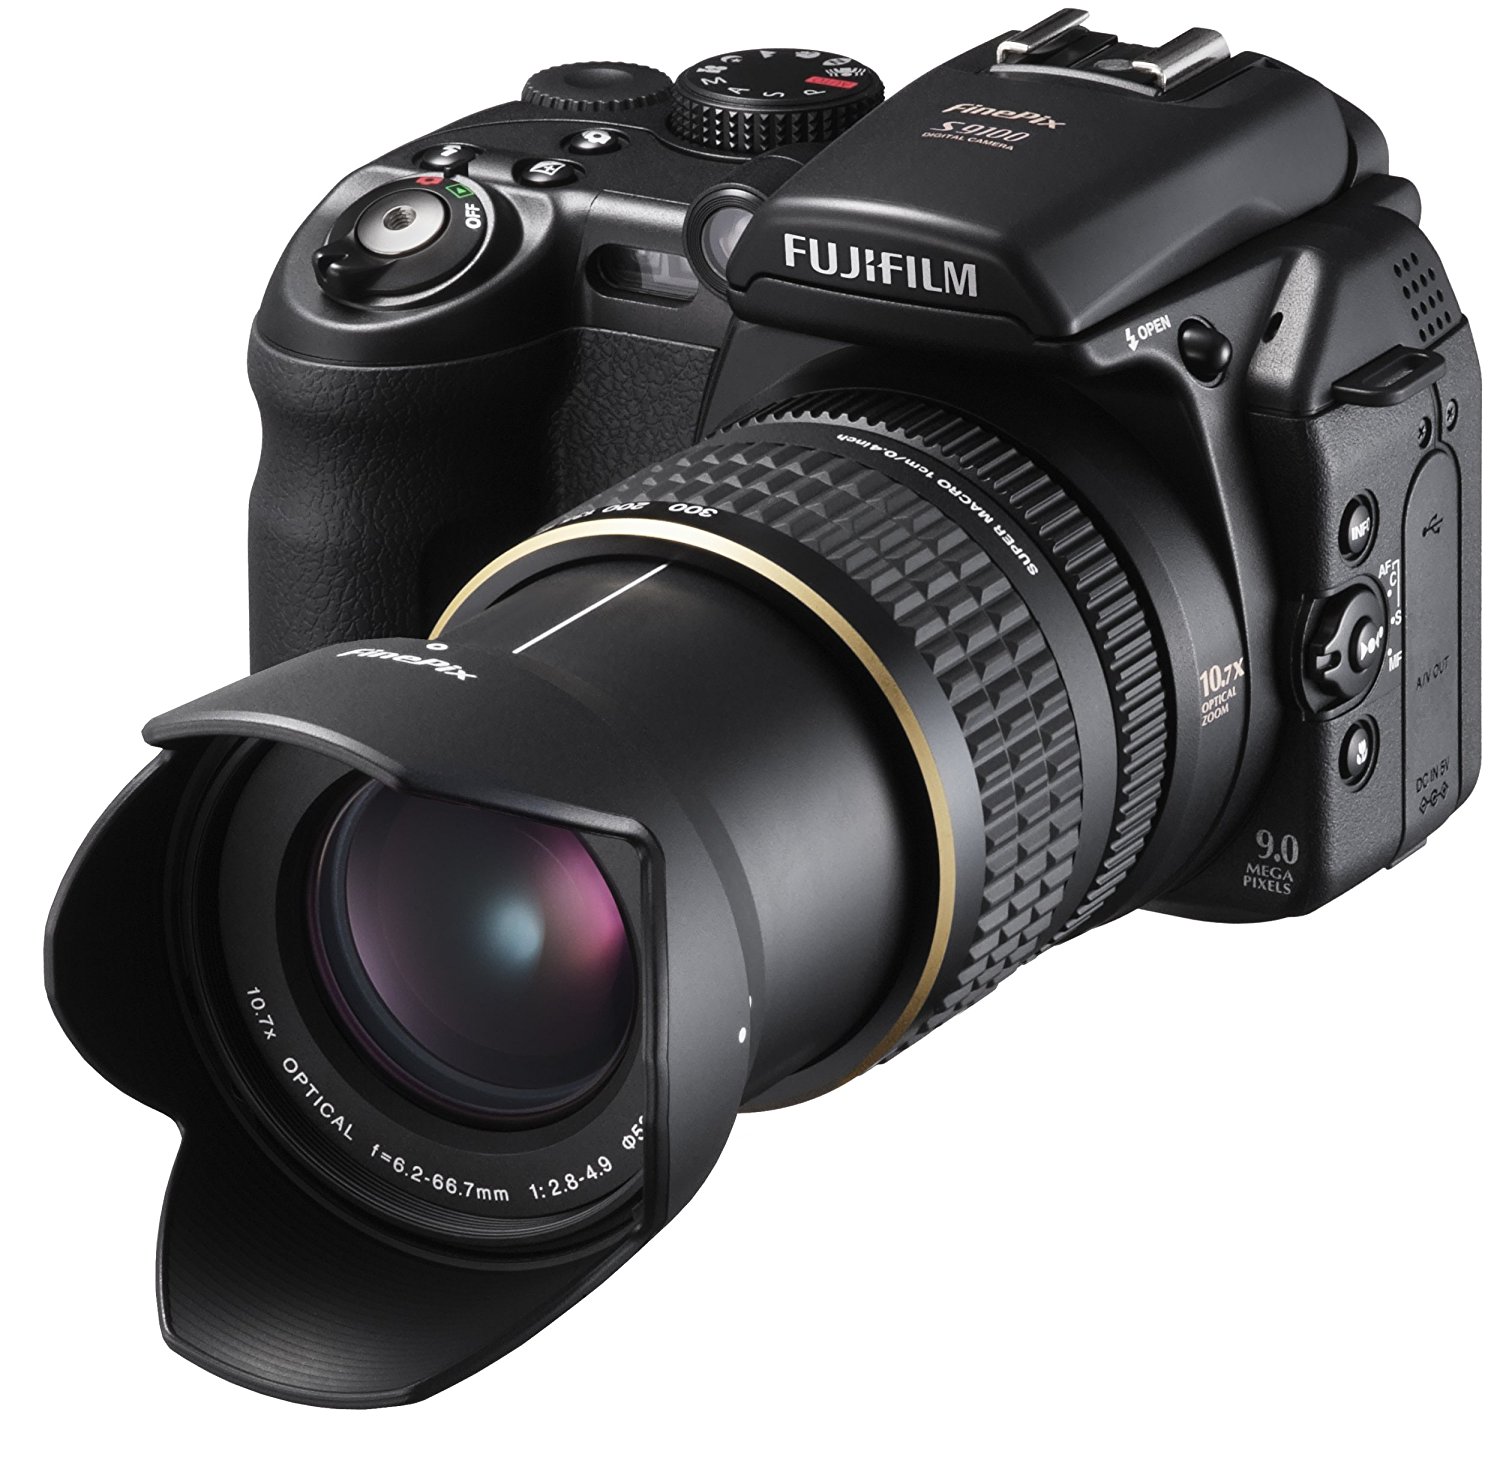 Amazon.com : Fujifilm Finepix S9100 9MP Digital Camera with 10.7x ...